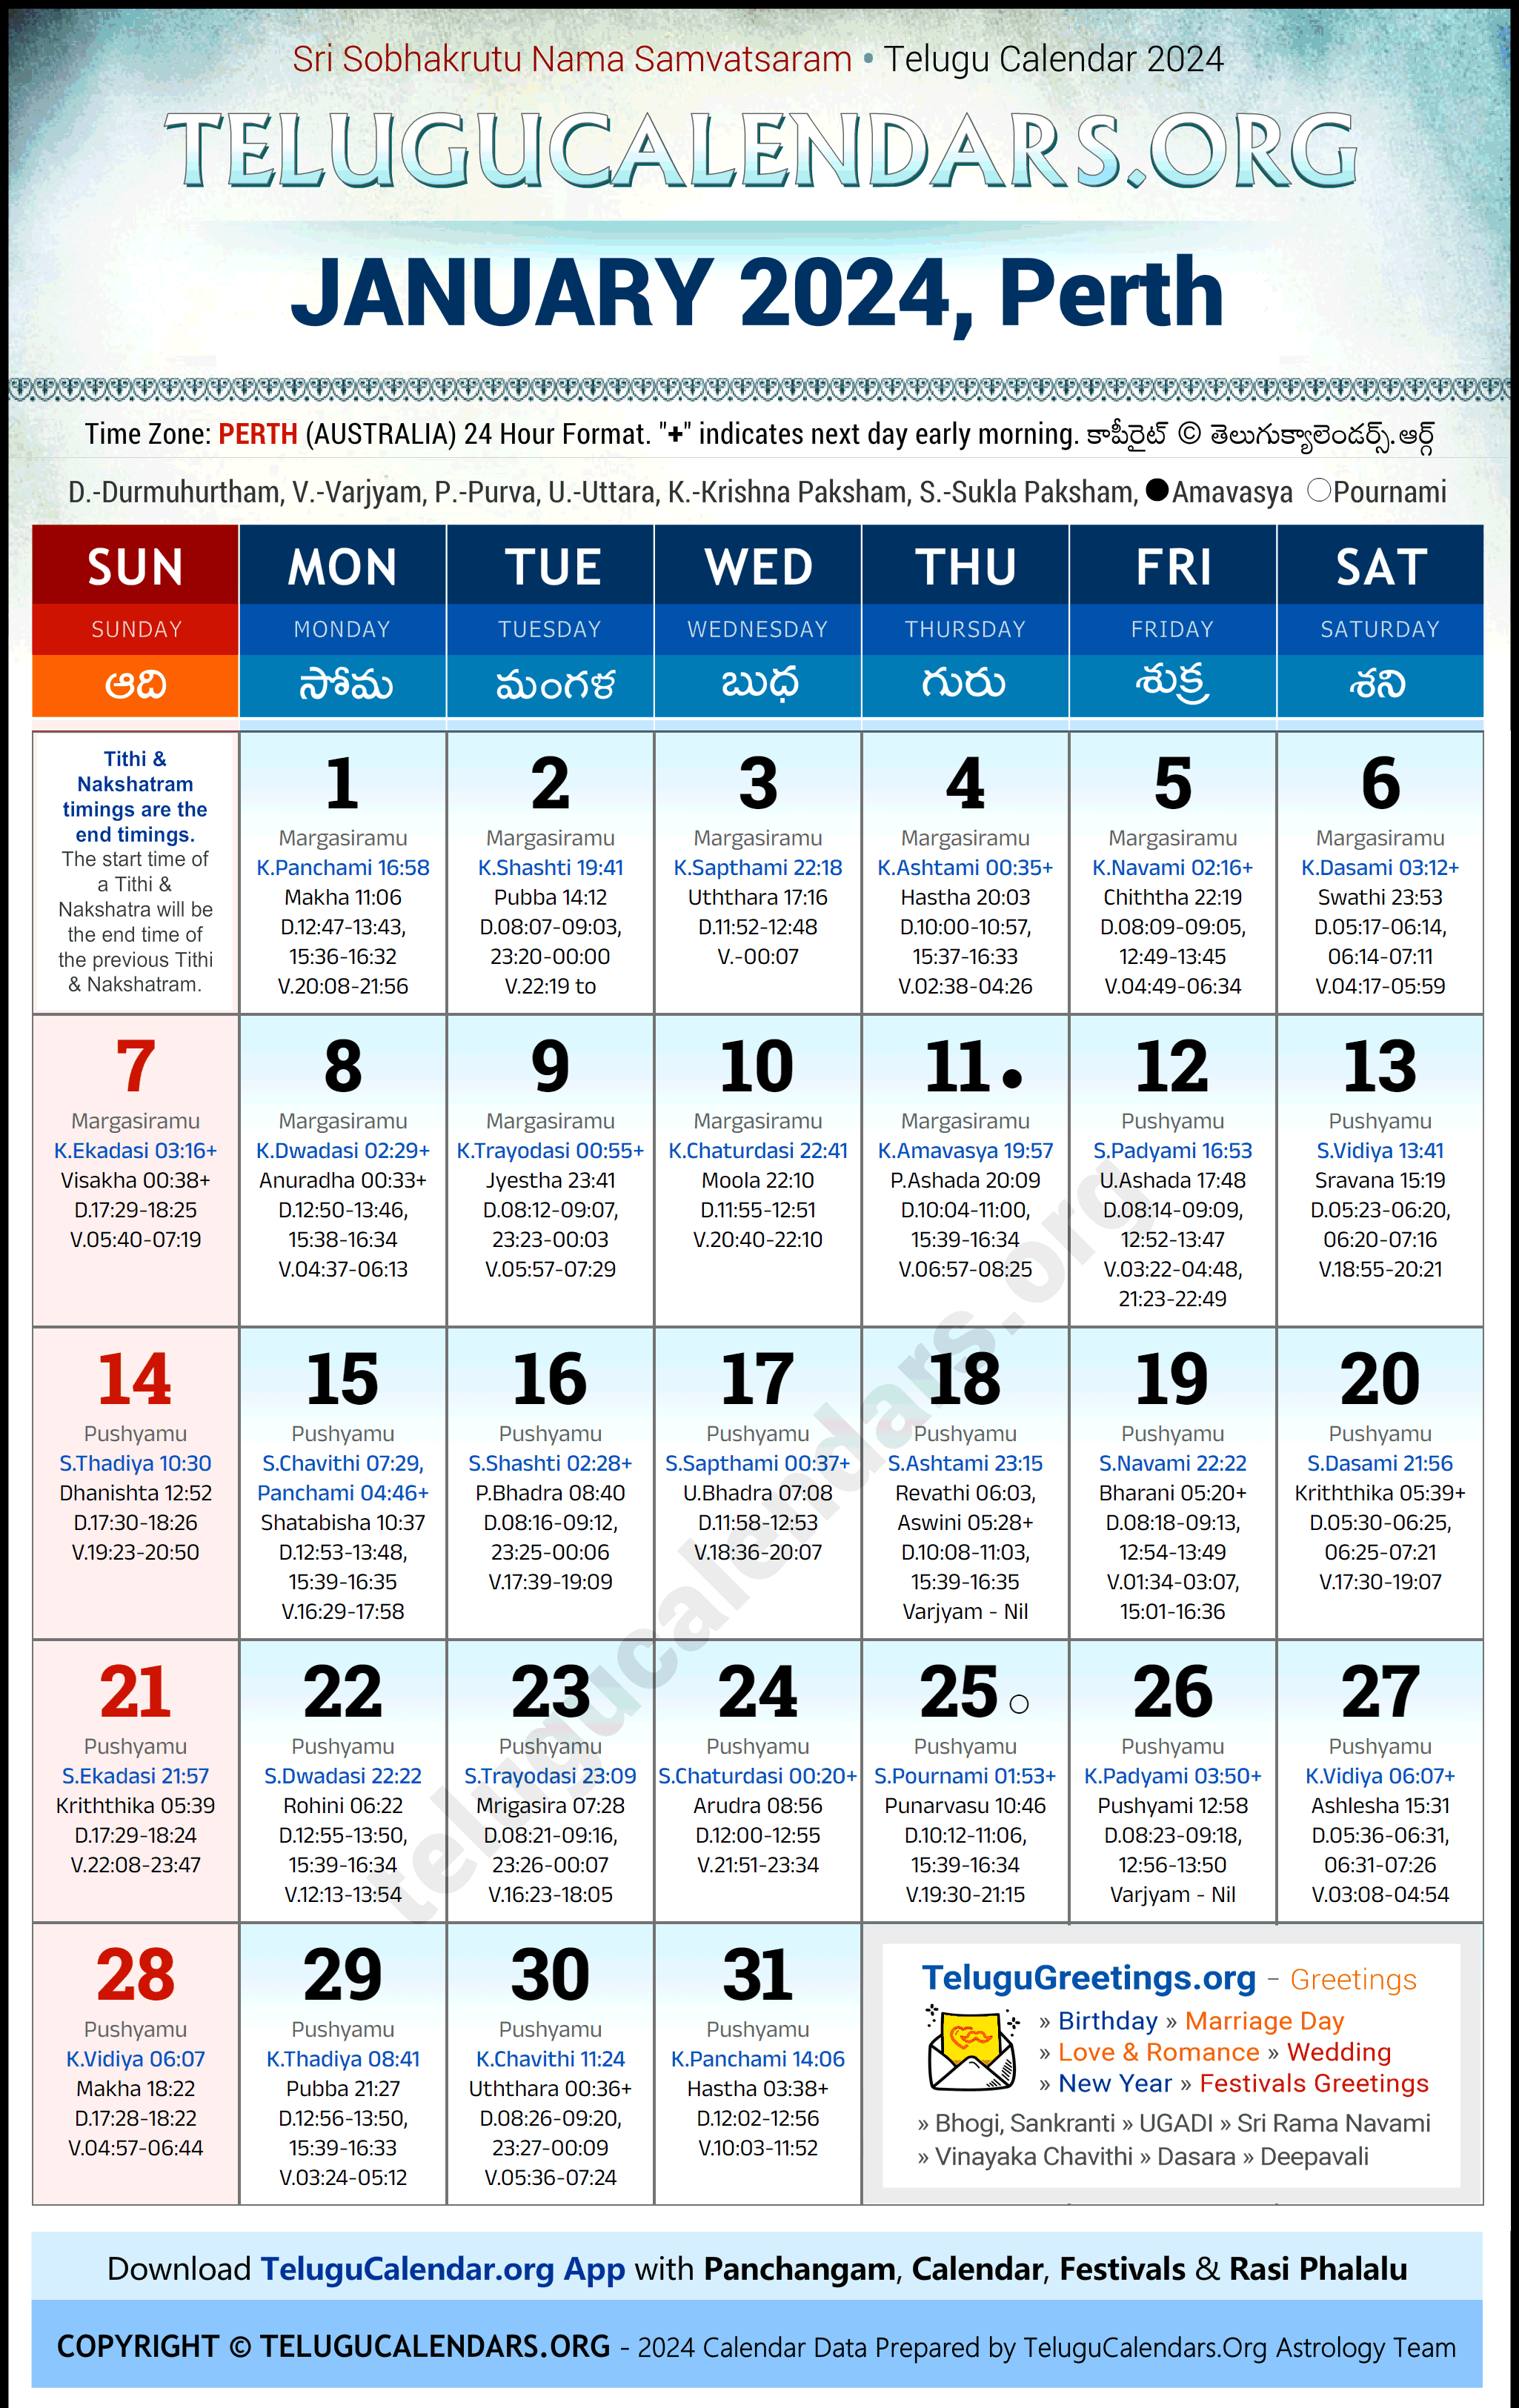 Telugu Calendar 2024 January Festivals for Perth